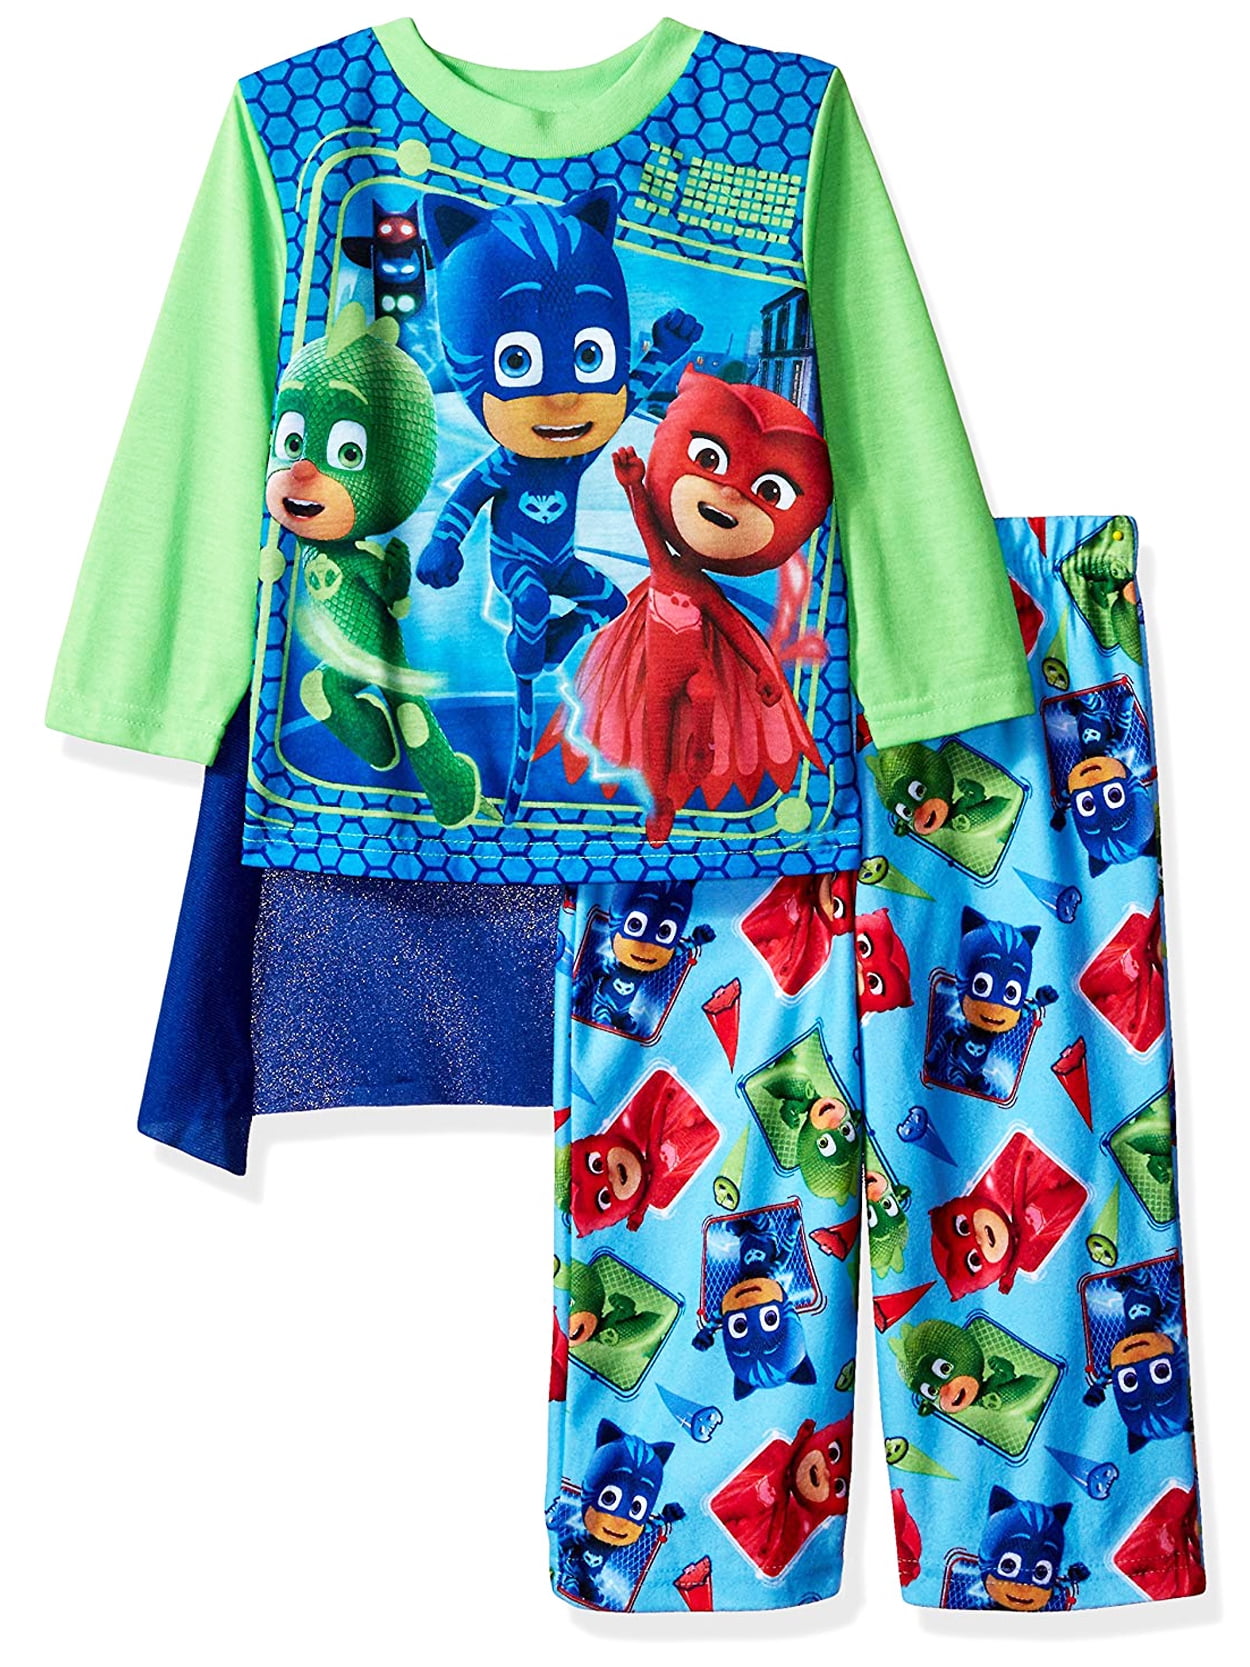 NEW PJ Masks Toddler Boys 2 Piece Blue Pajamas Set 2T Sleep Outfit NWT 